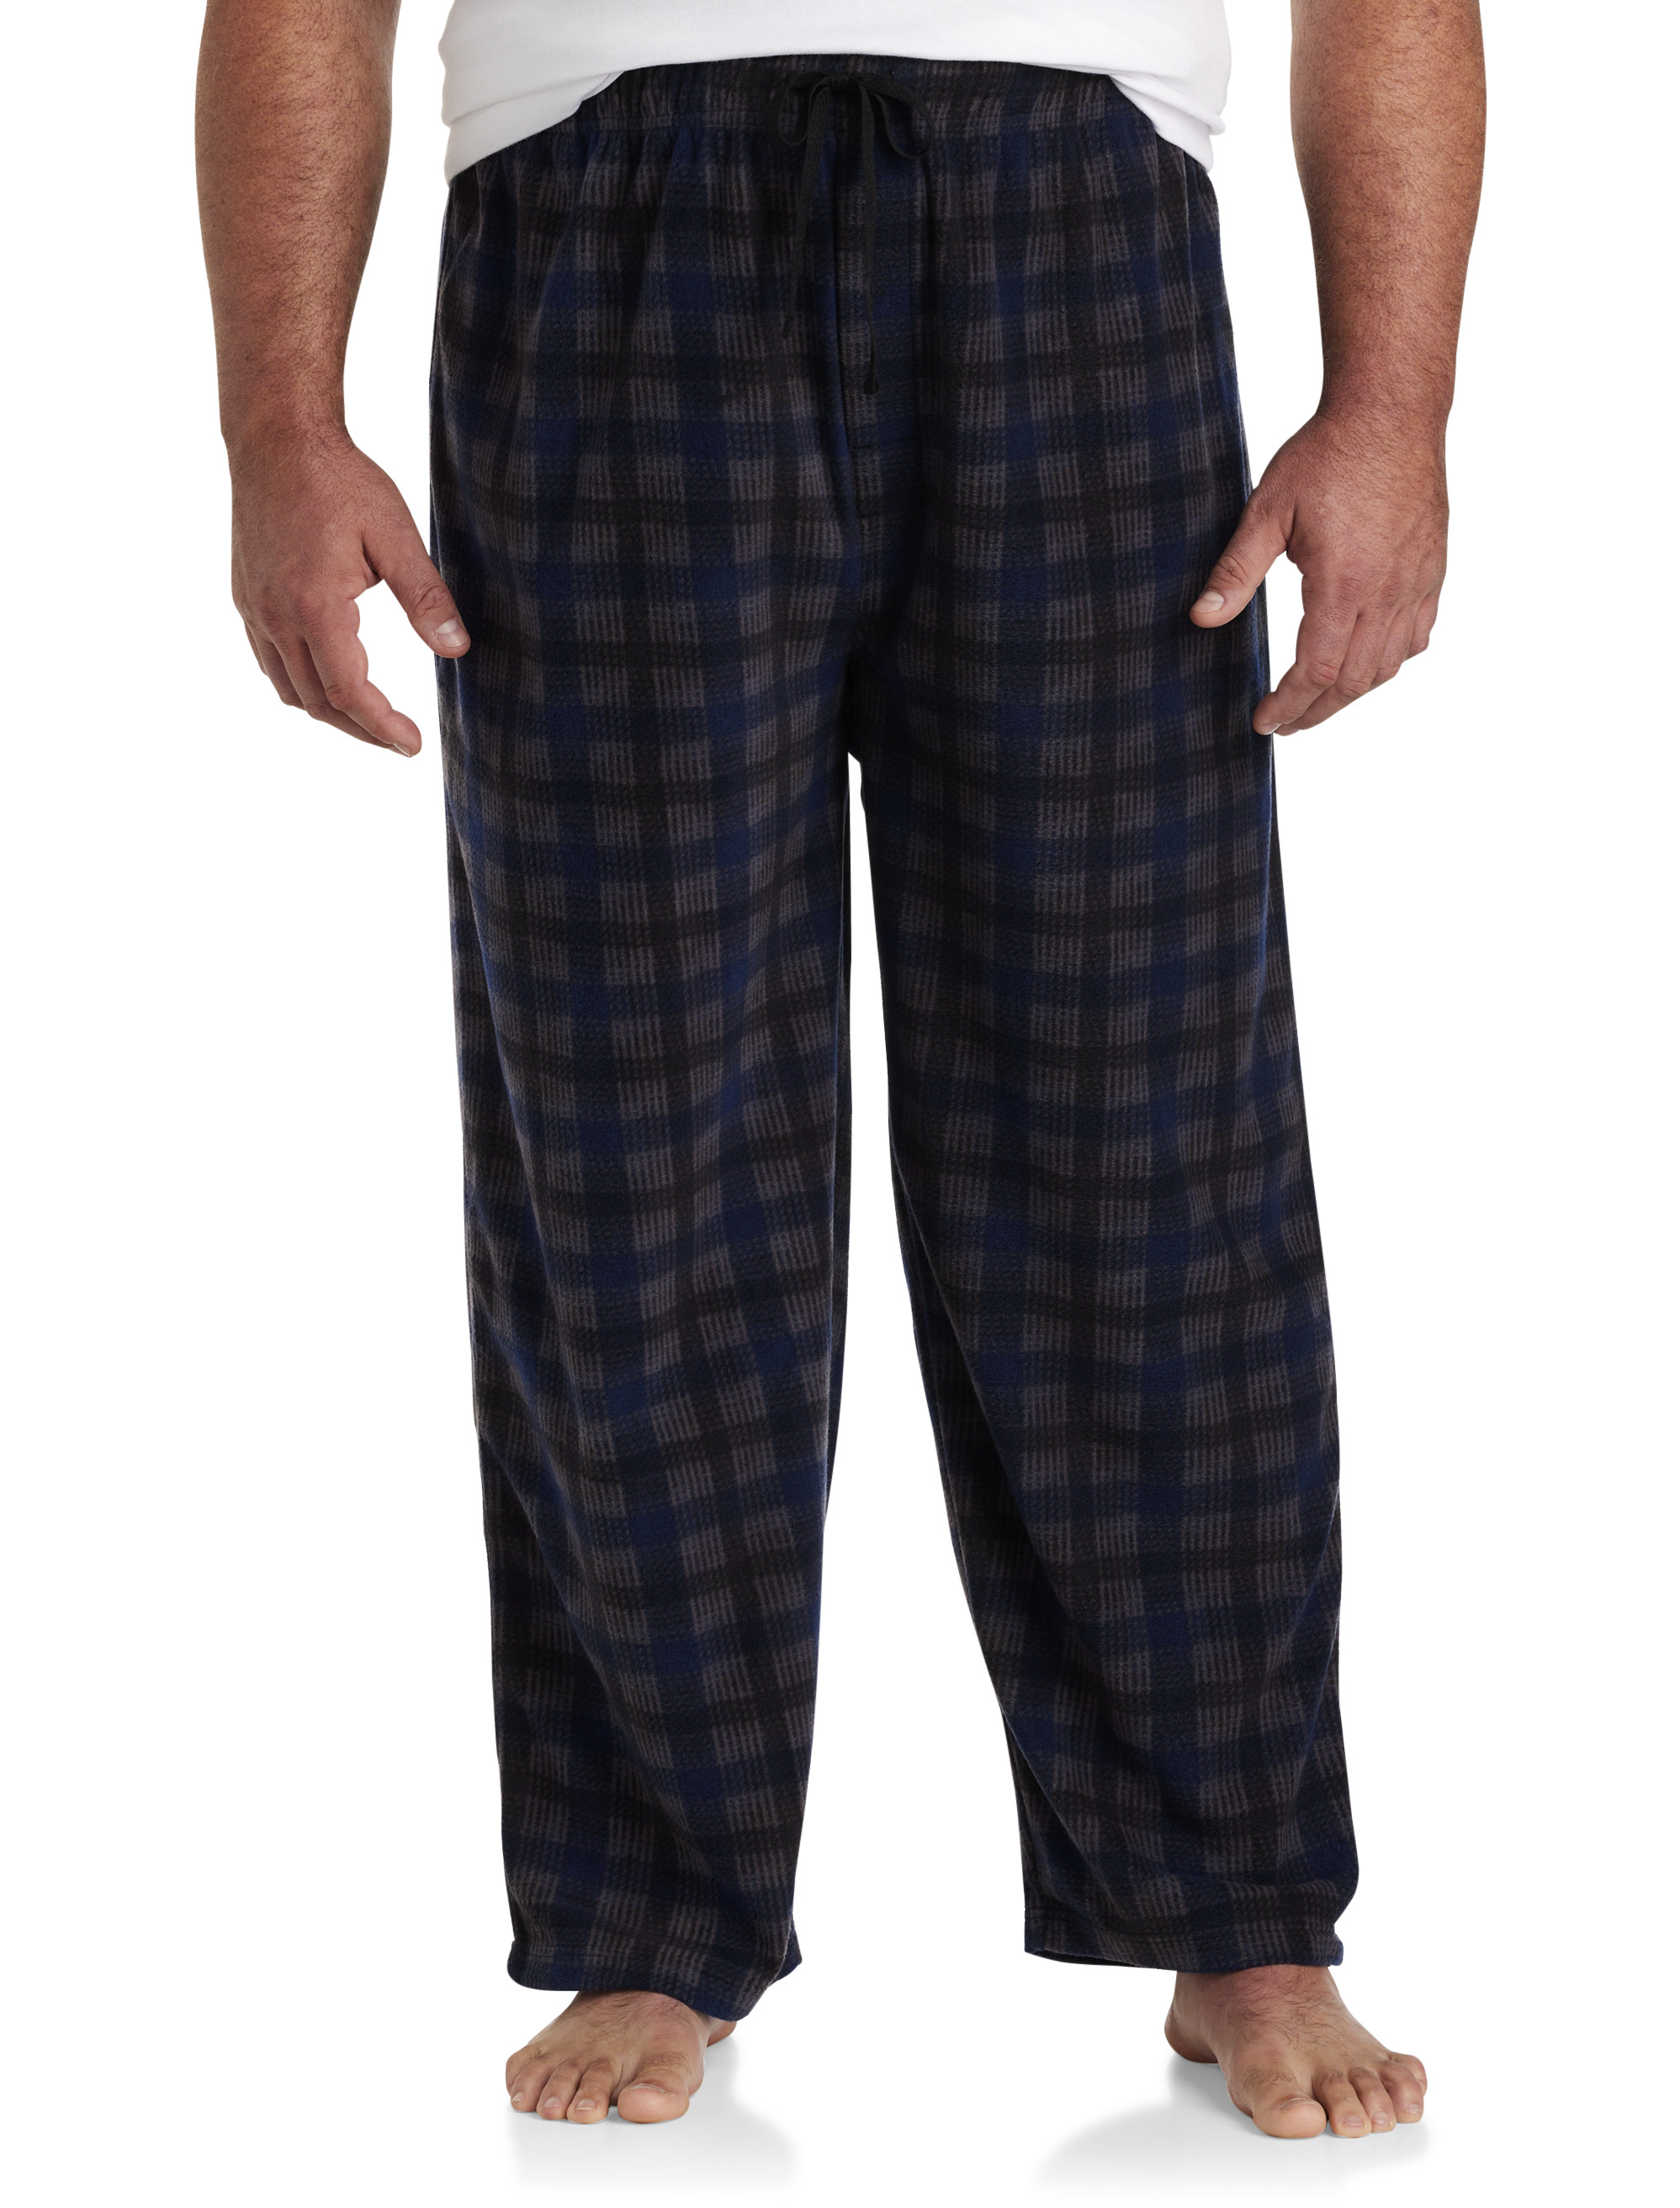 Plaid Pajama Pants for Tall Men